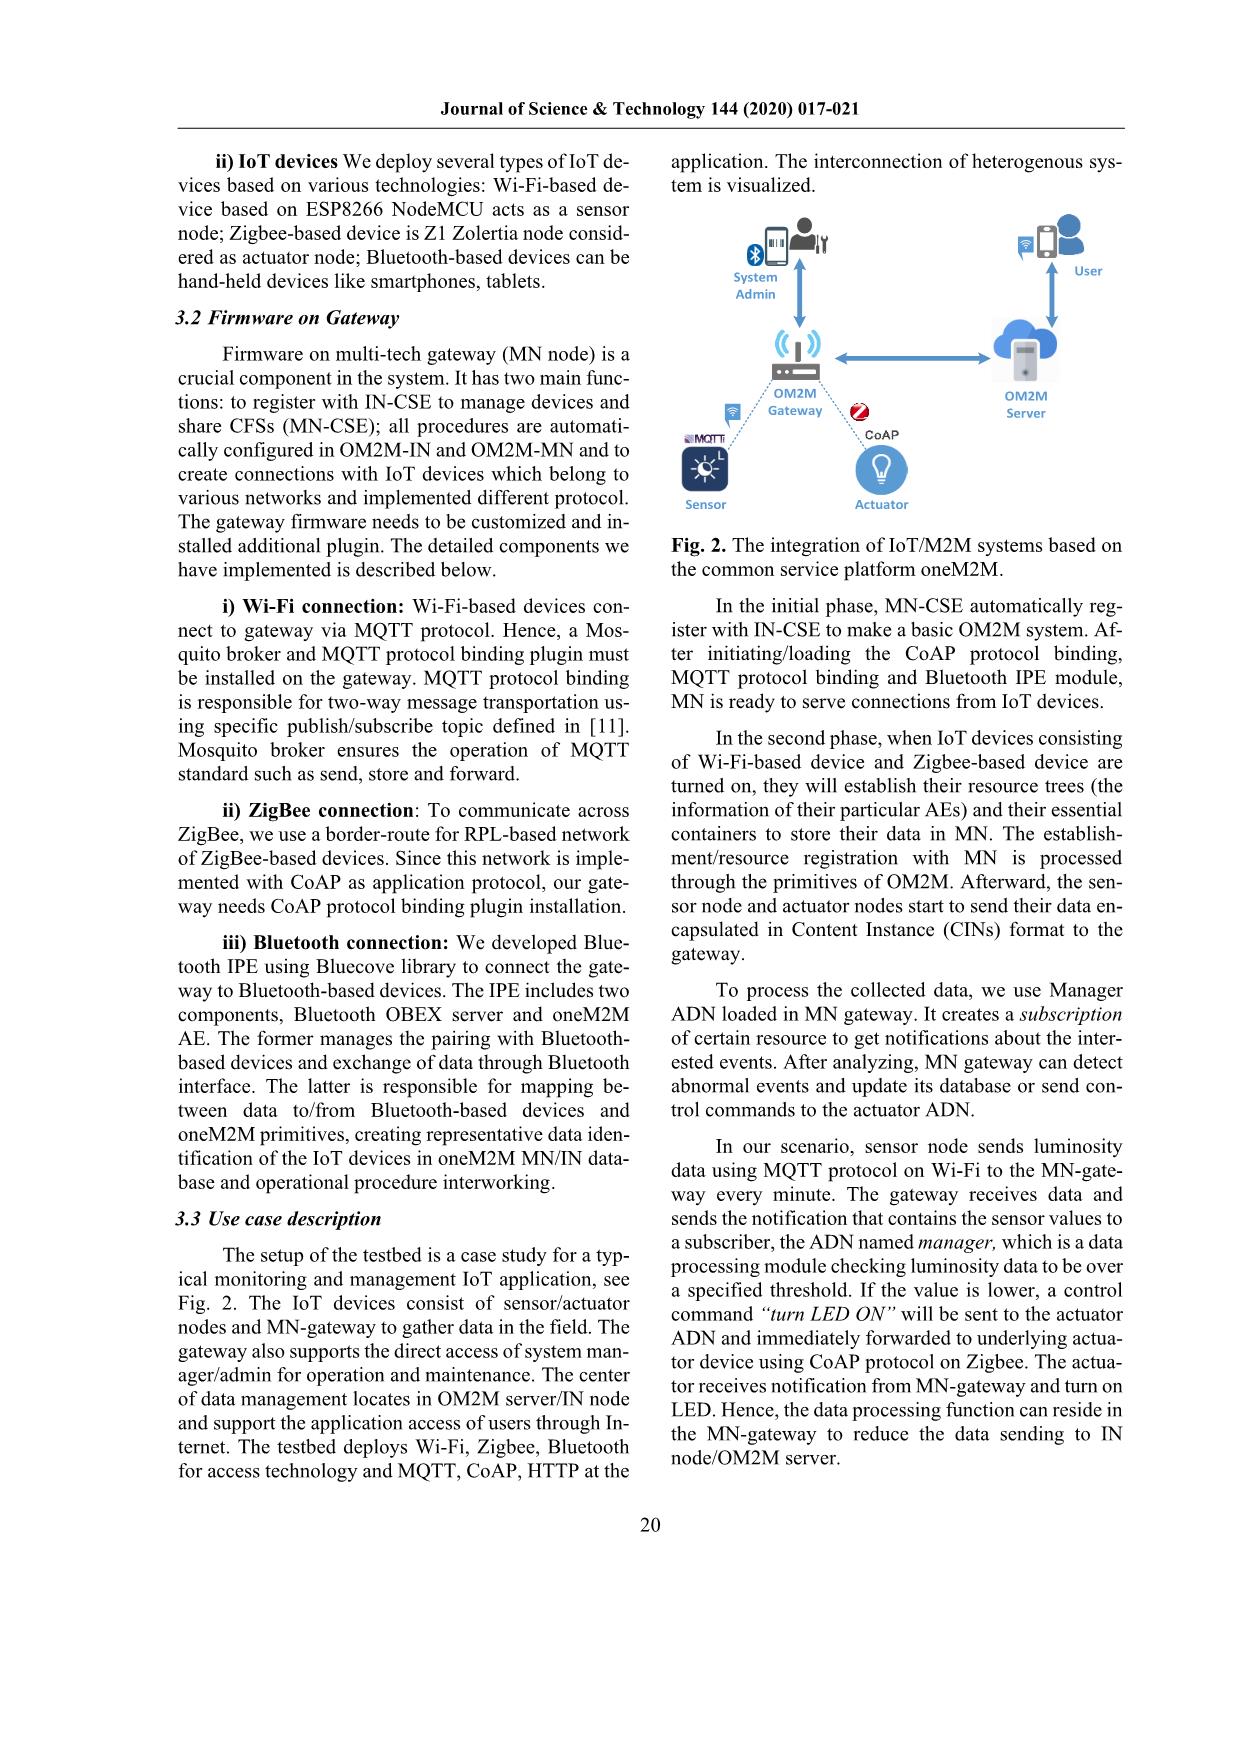 Service Platform for Integration of various M2M/IoT system trang 4